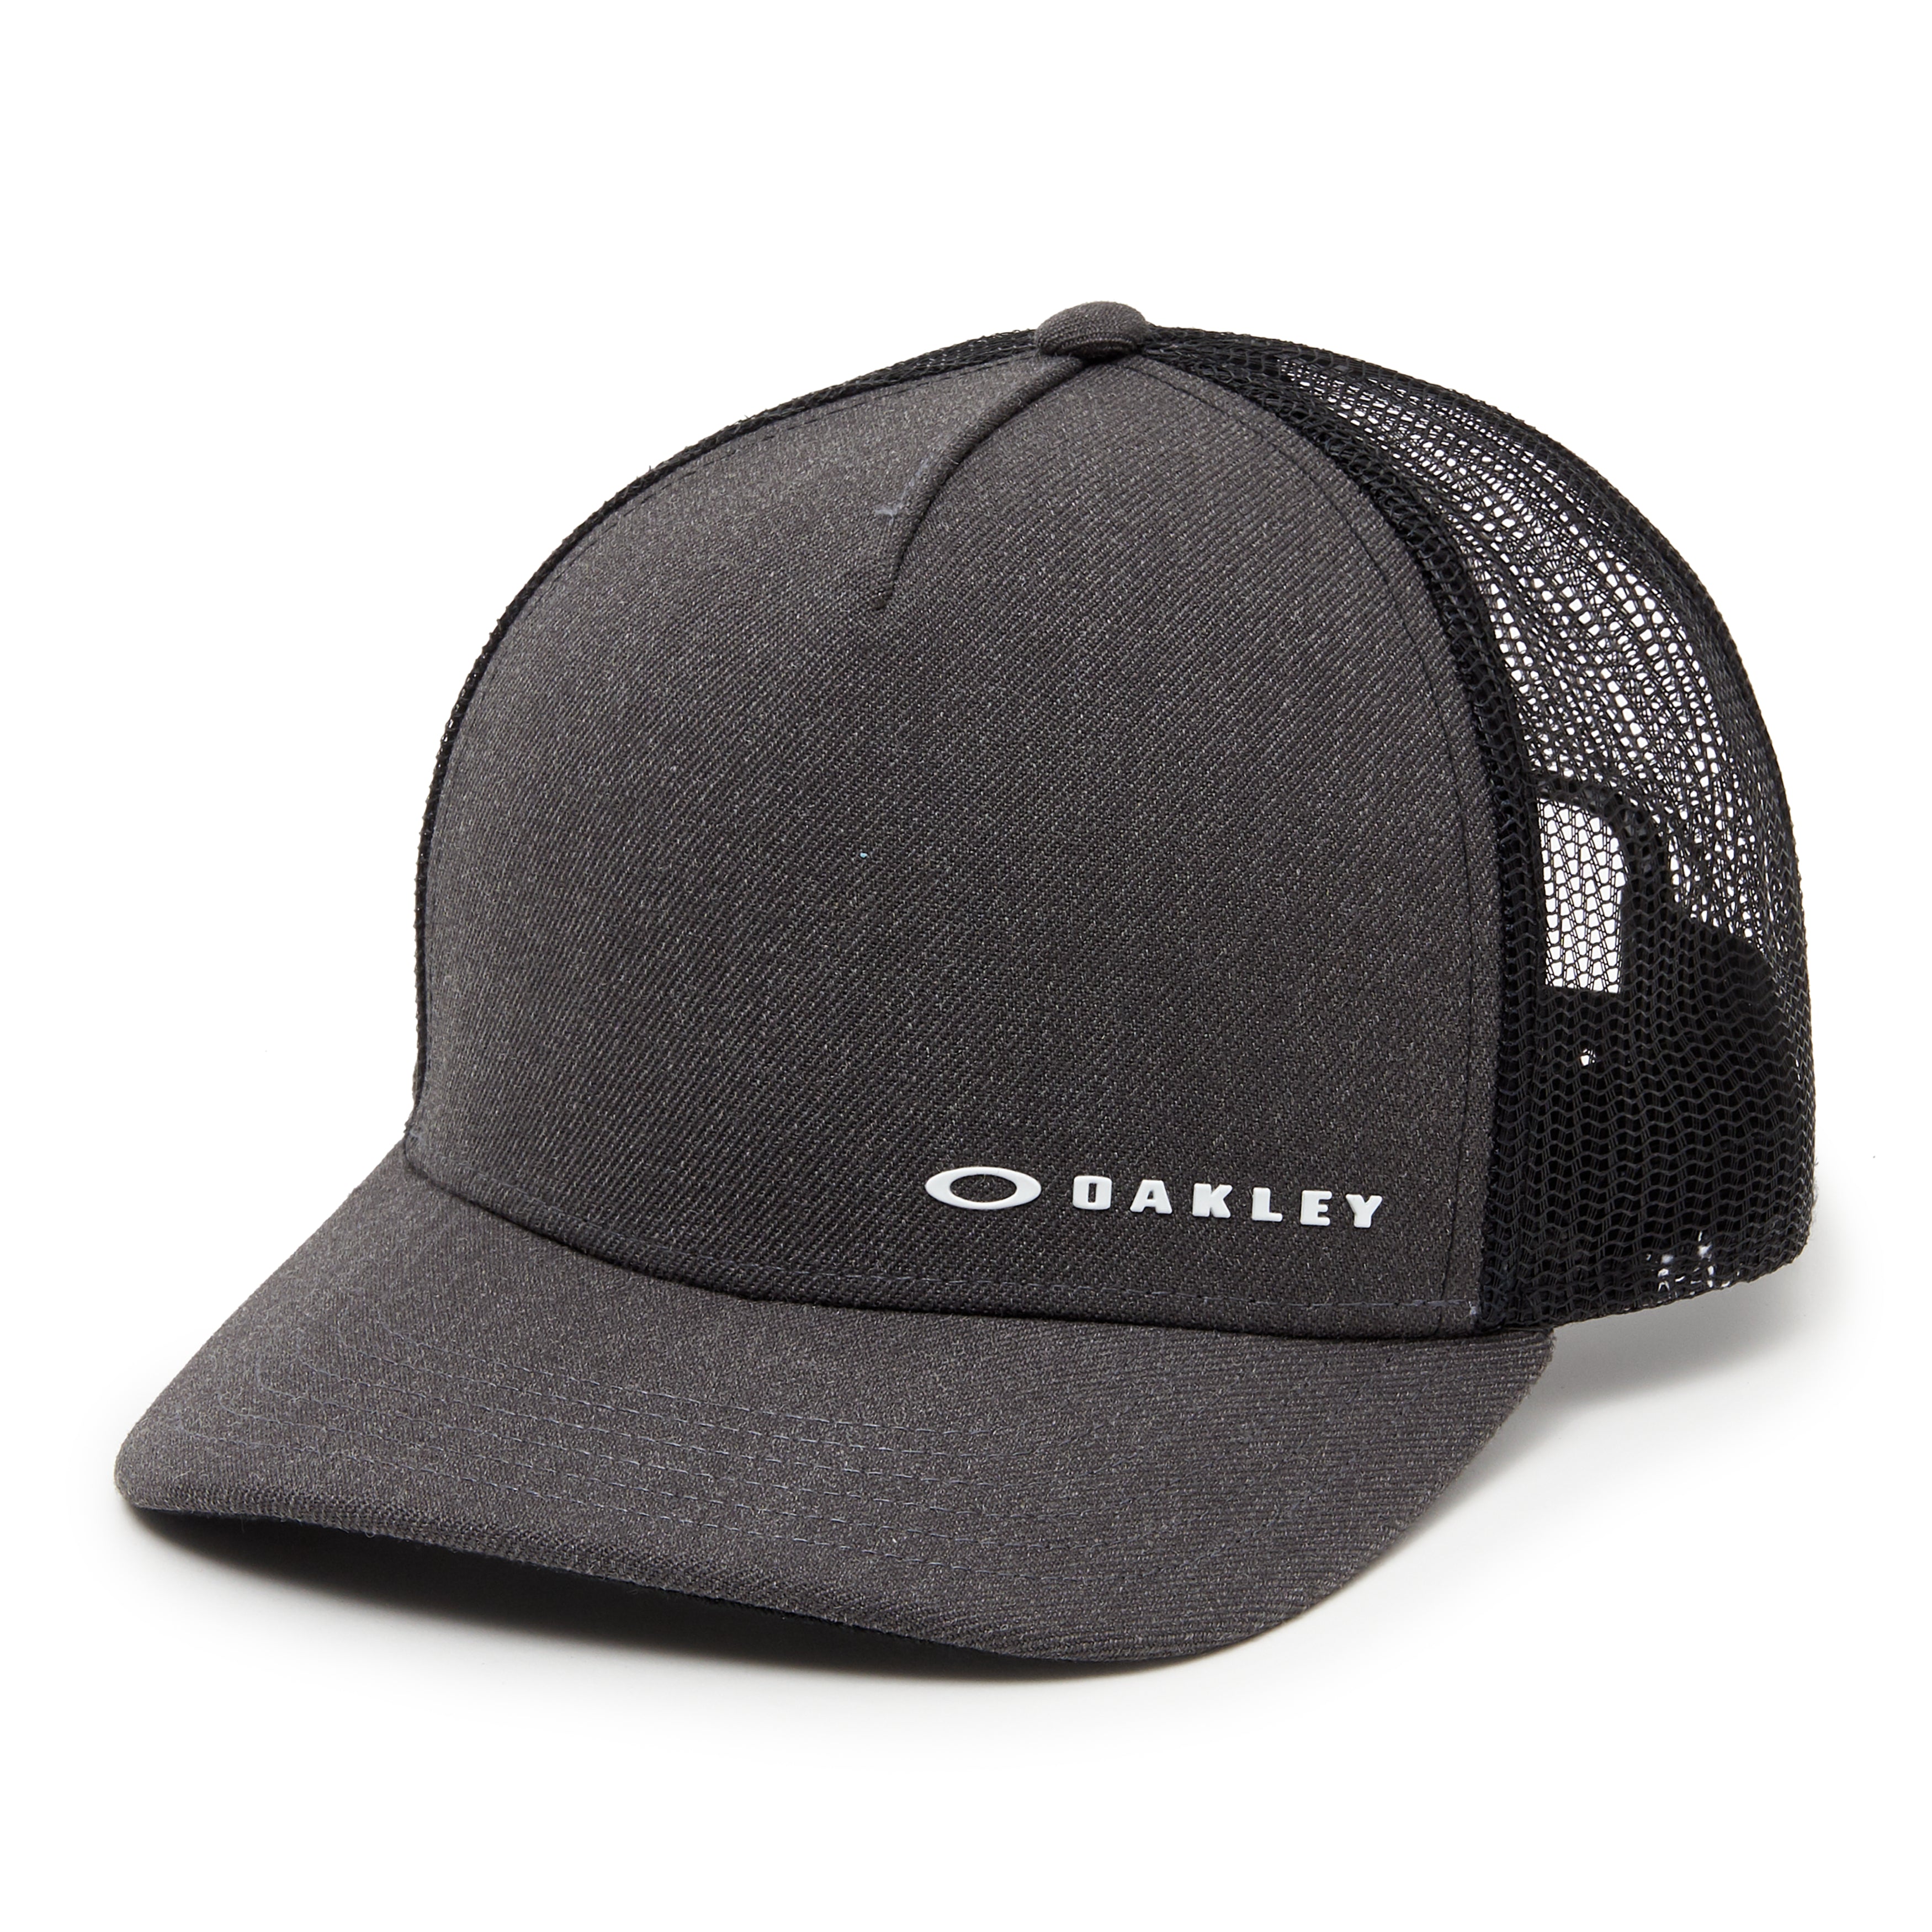 Oakley Chalten Cap black